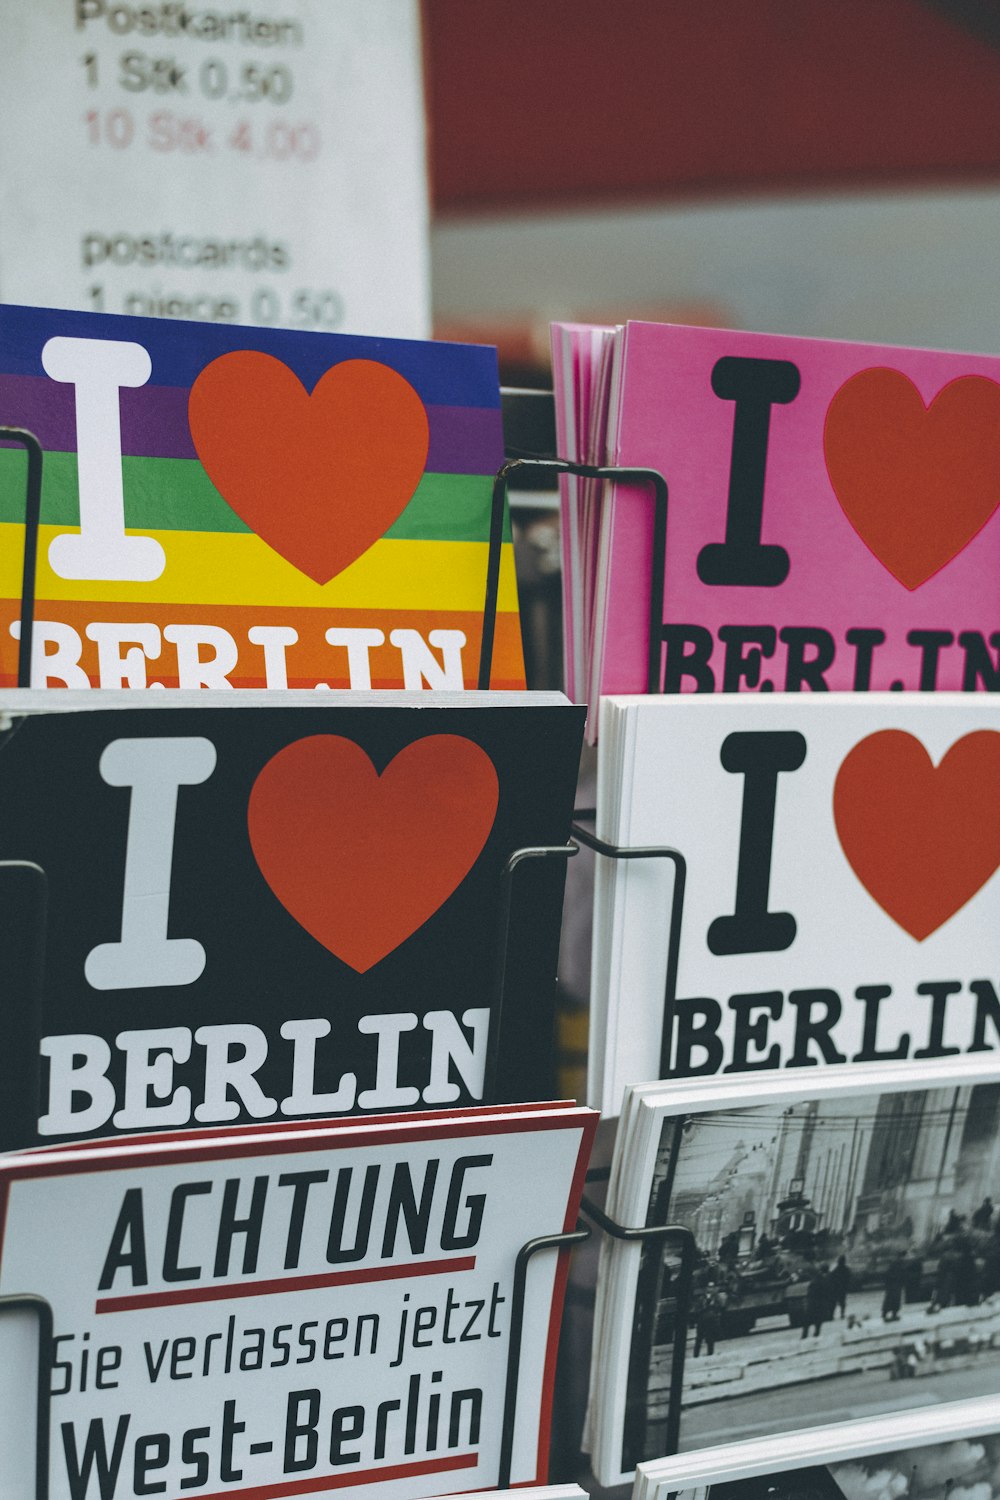 empilage i J’aime les livres de Berlin